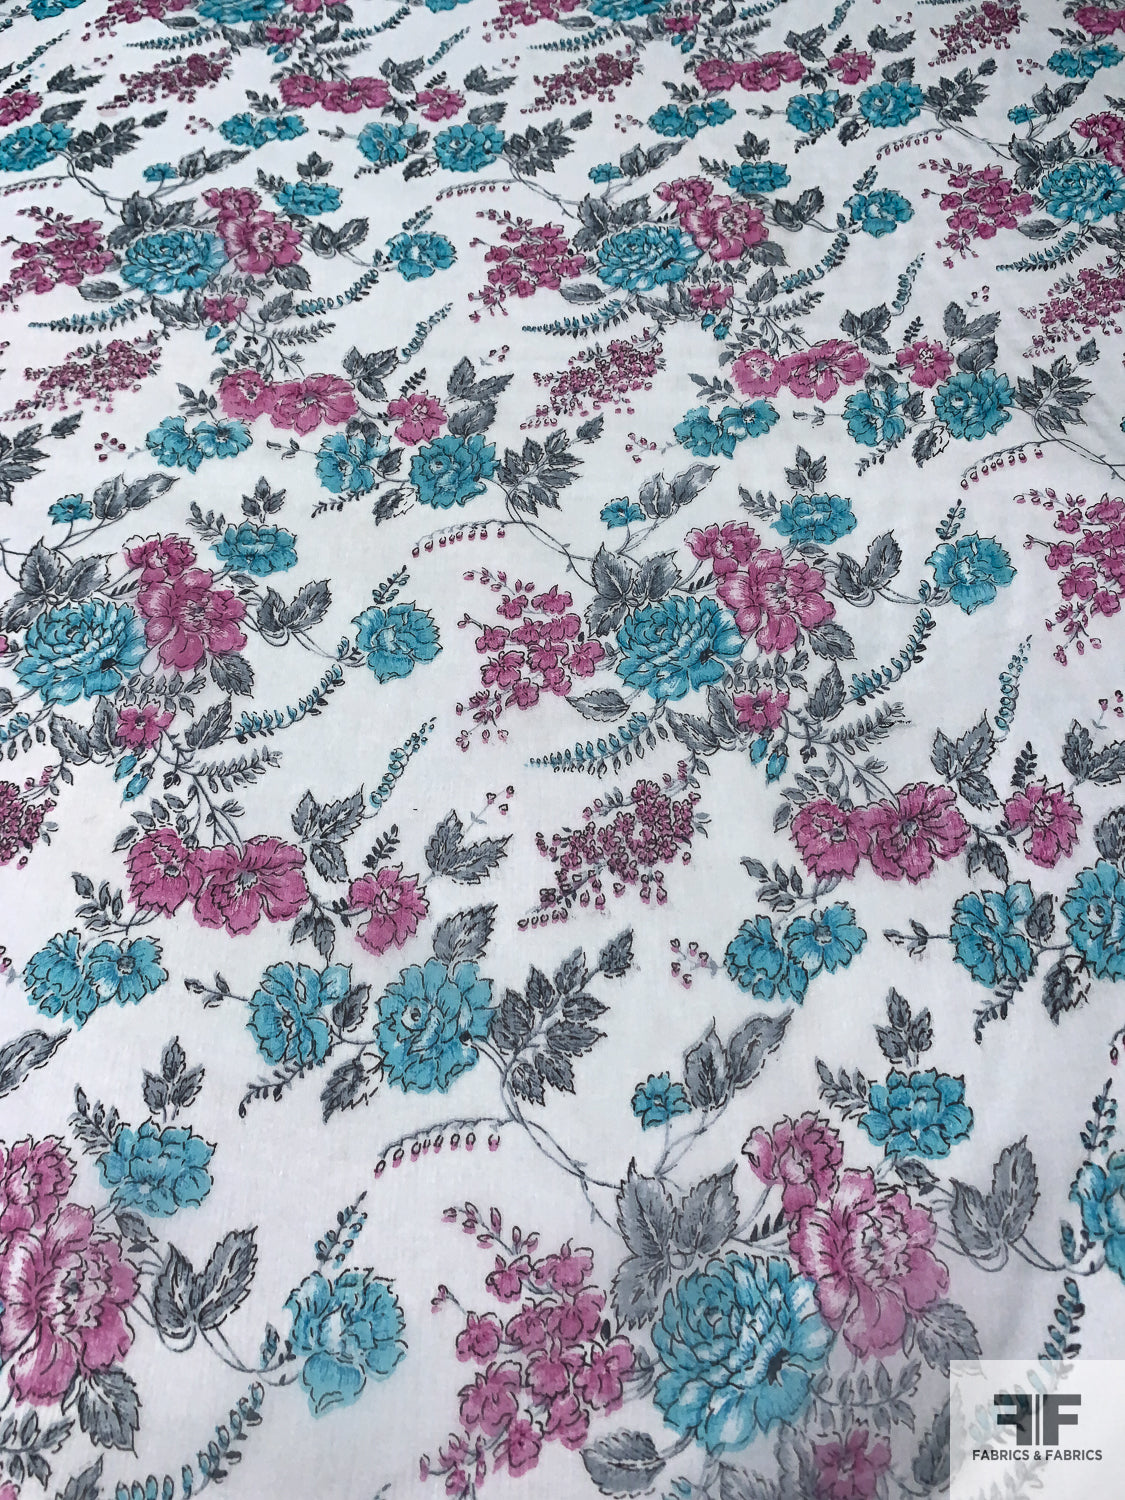 Floral Printed Crinkled Silk Chiffon - Sky Blue / Aqua Blue / Orchid Pink